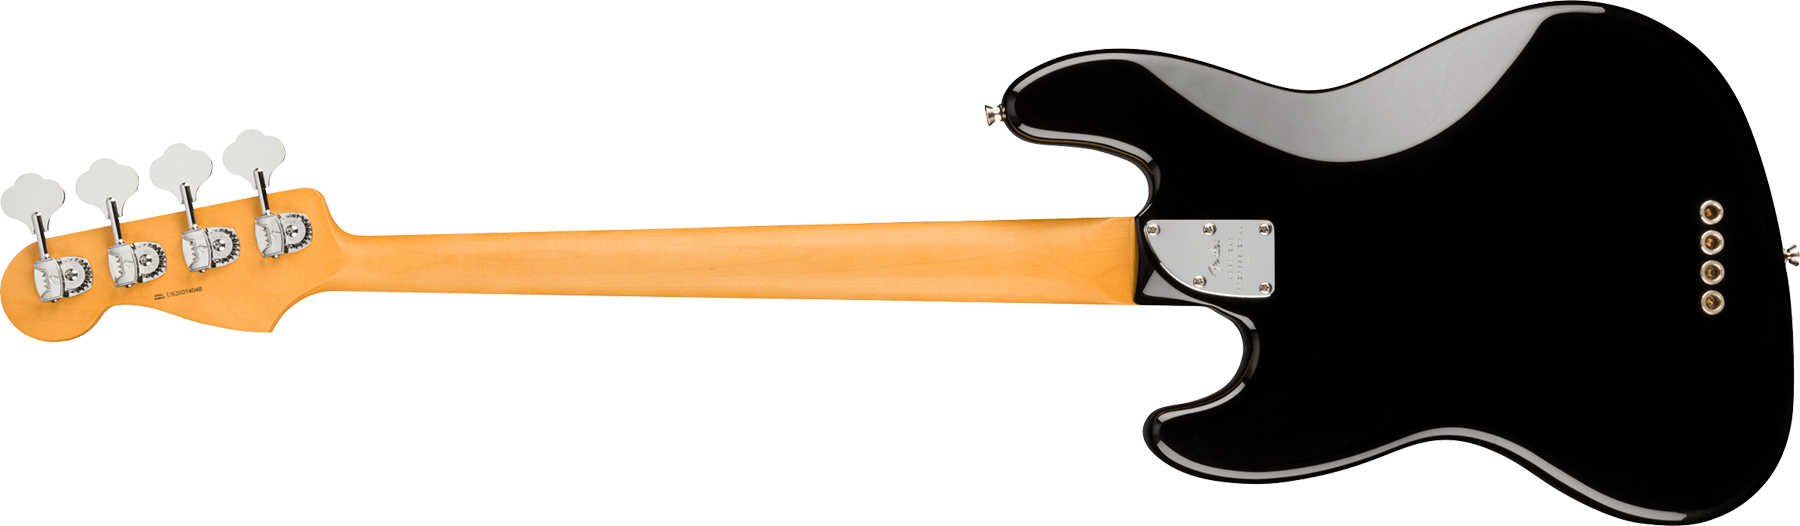 Fender Jazz Bass American Professional Ii Usa Rw - Black - Solid body elektrische bas - Variation 1